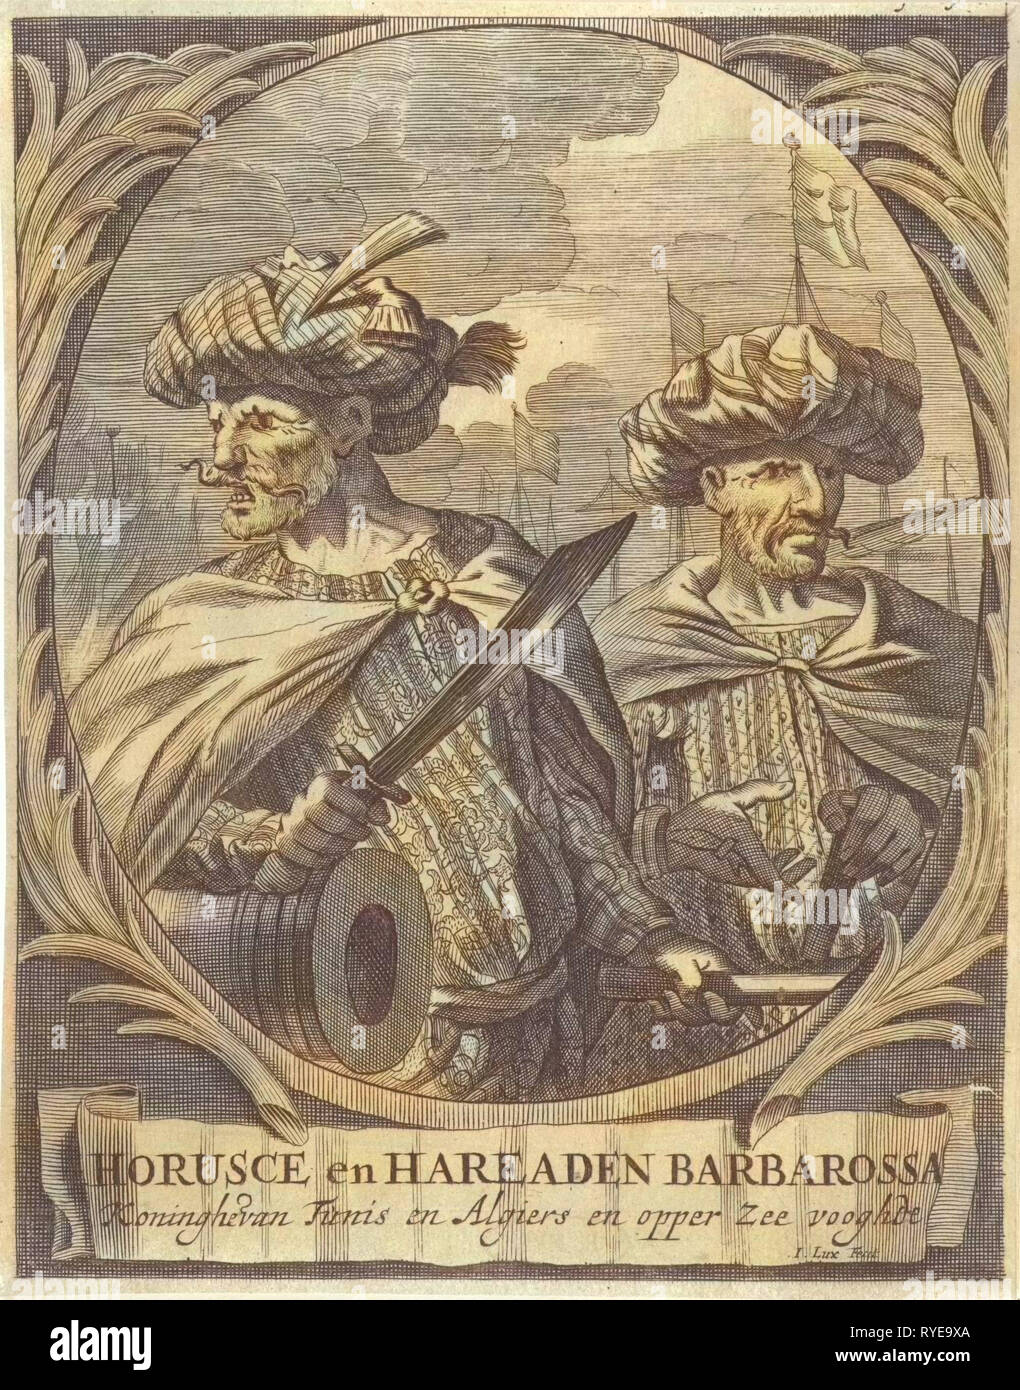 Portraits of Horusce and Hareaden Barbarossa, Barbary pirates, Ignatius Lux, 1659 - 1713 Stock Photo